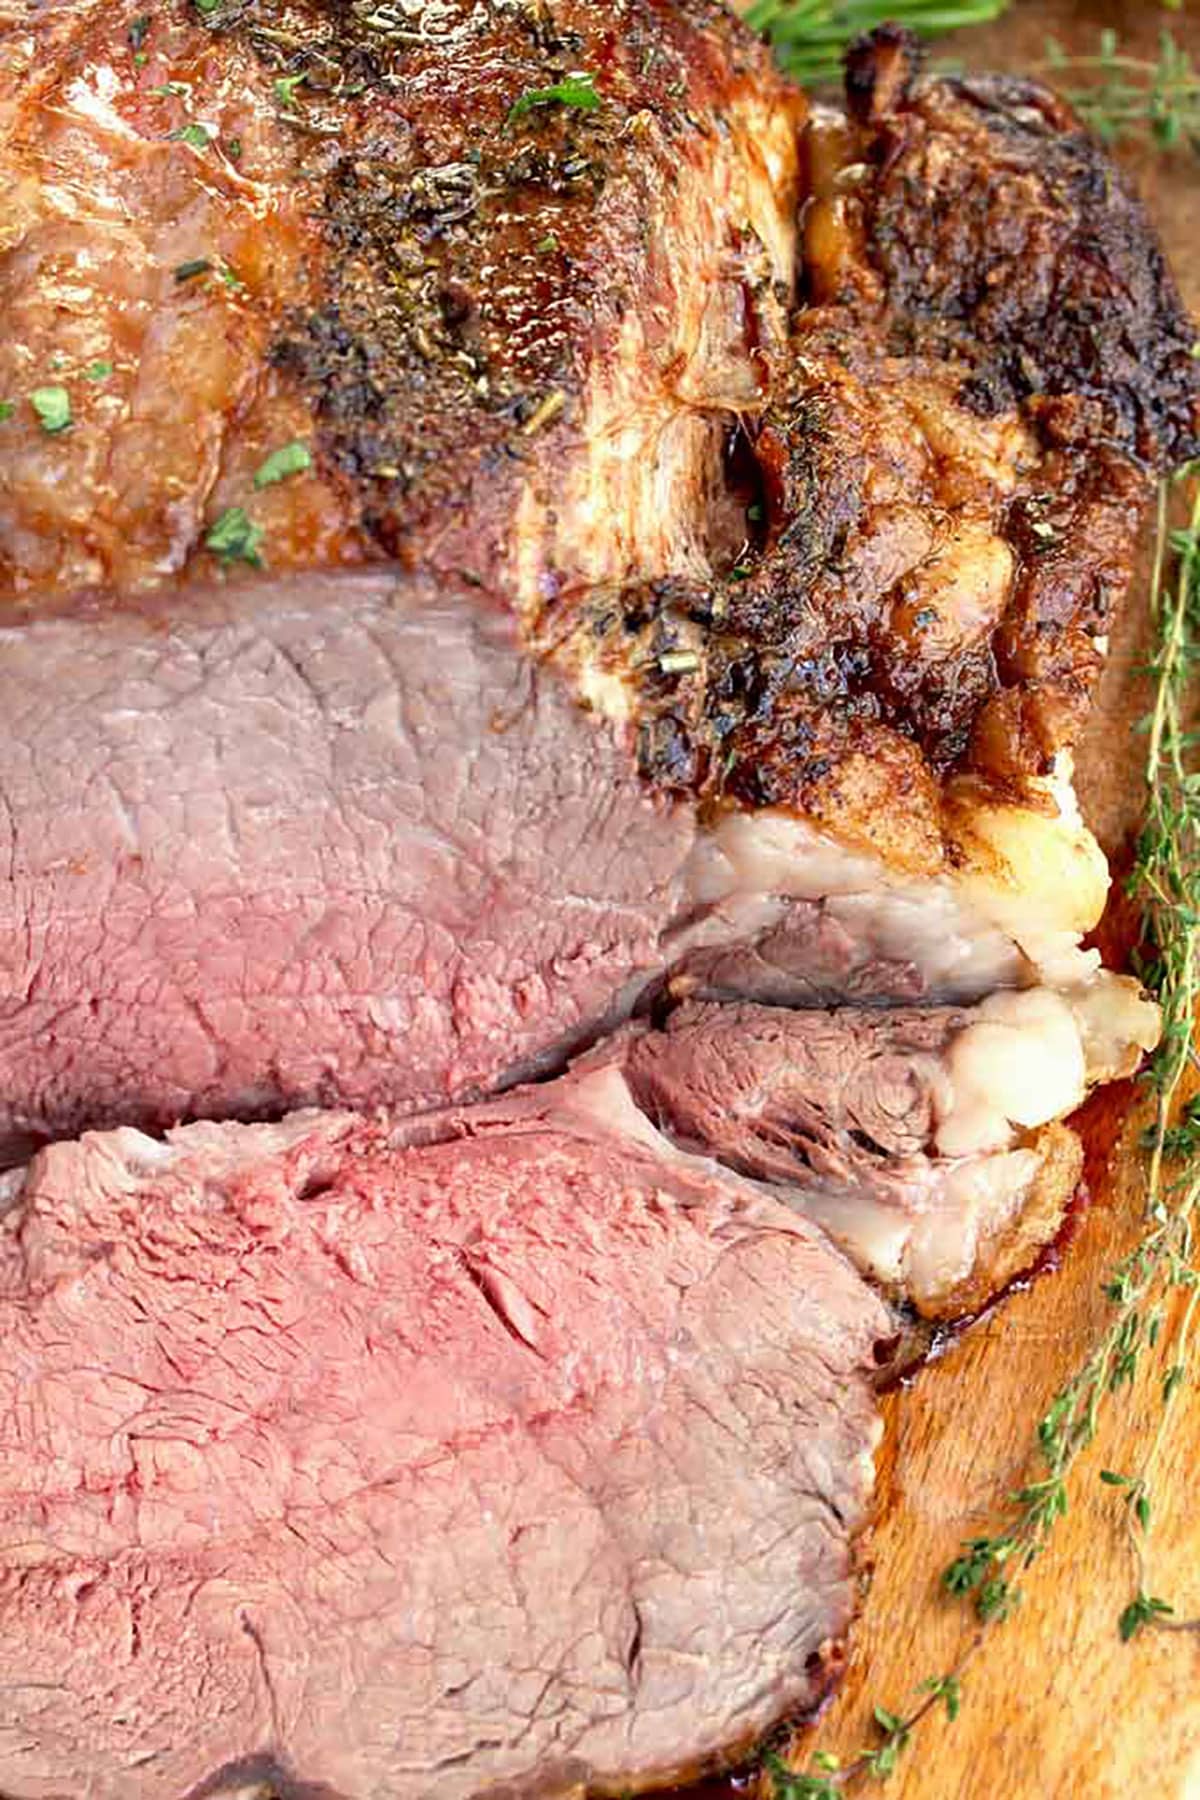 Close up of side of sliced prime rib roast.